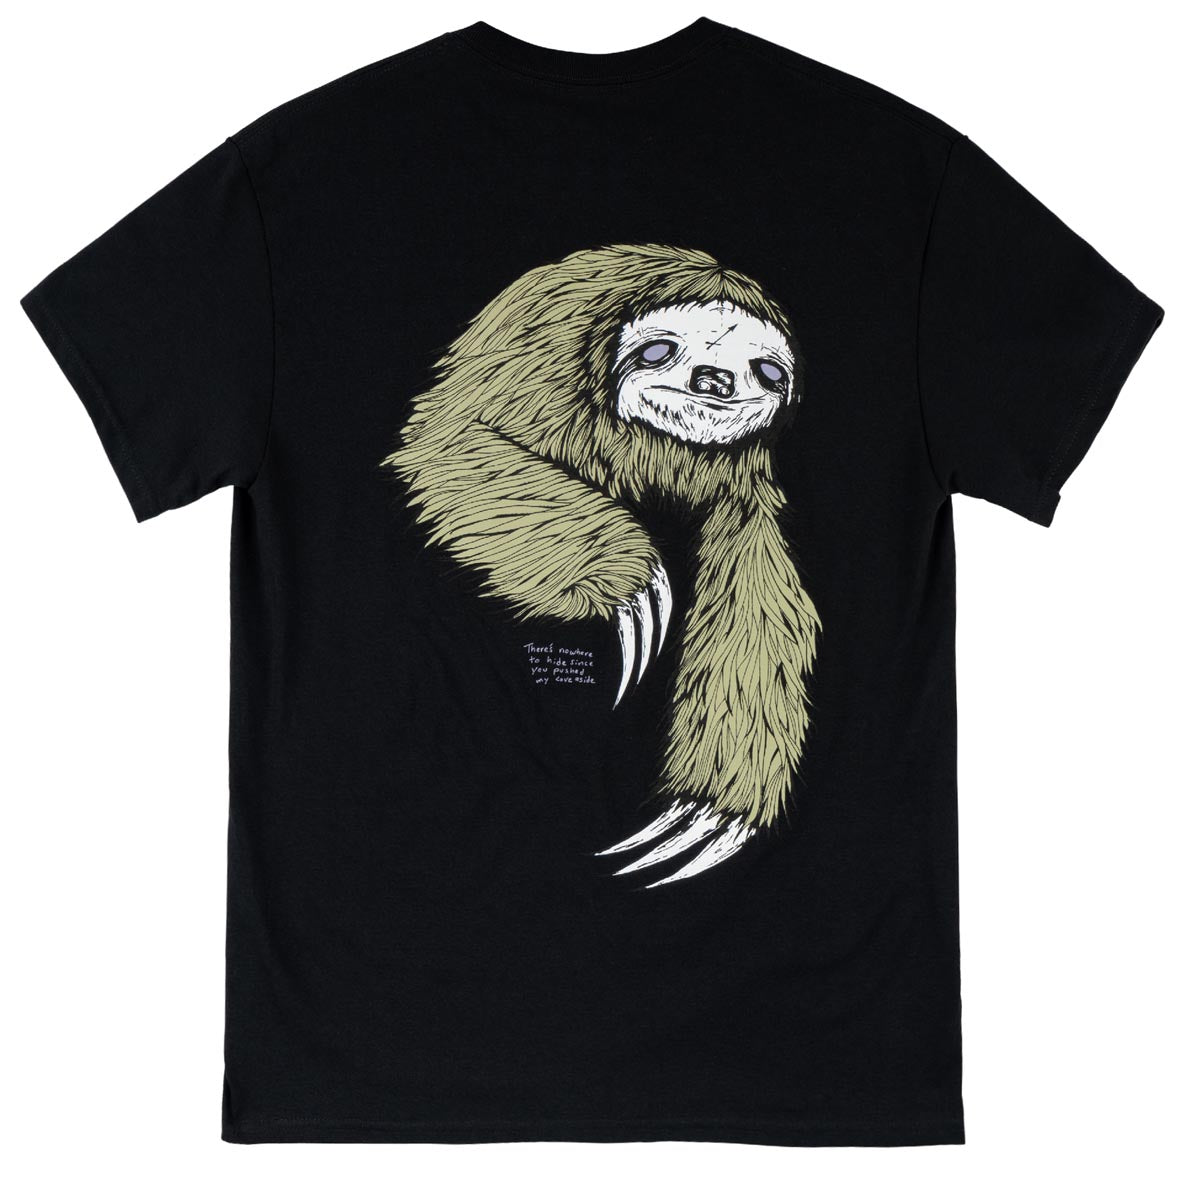 Welcome Sloth T-Shirt - Black/Sage image 1